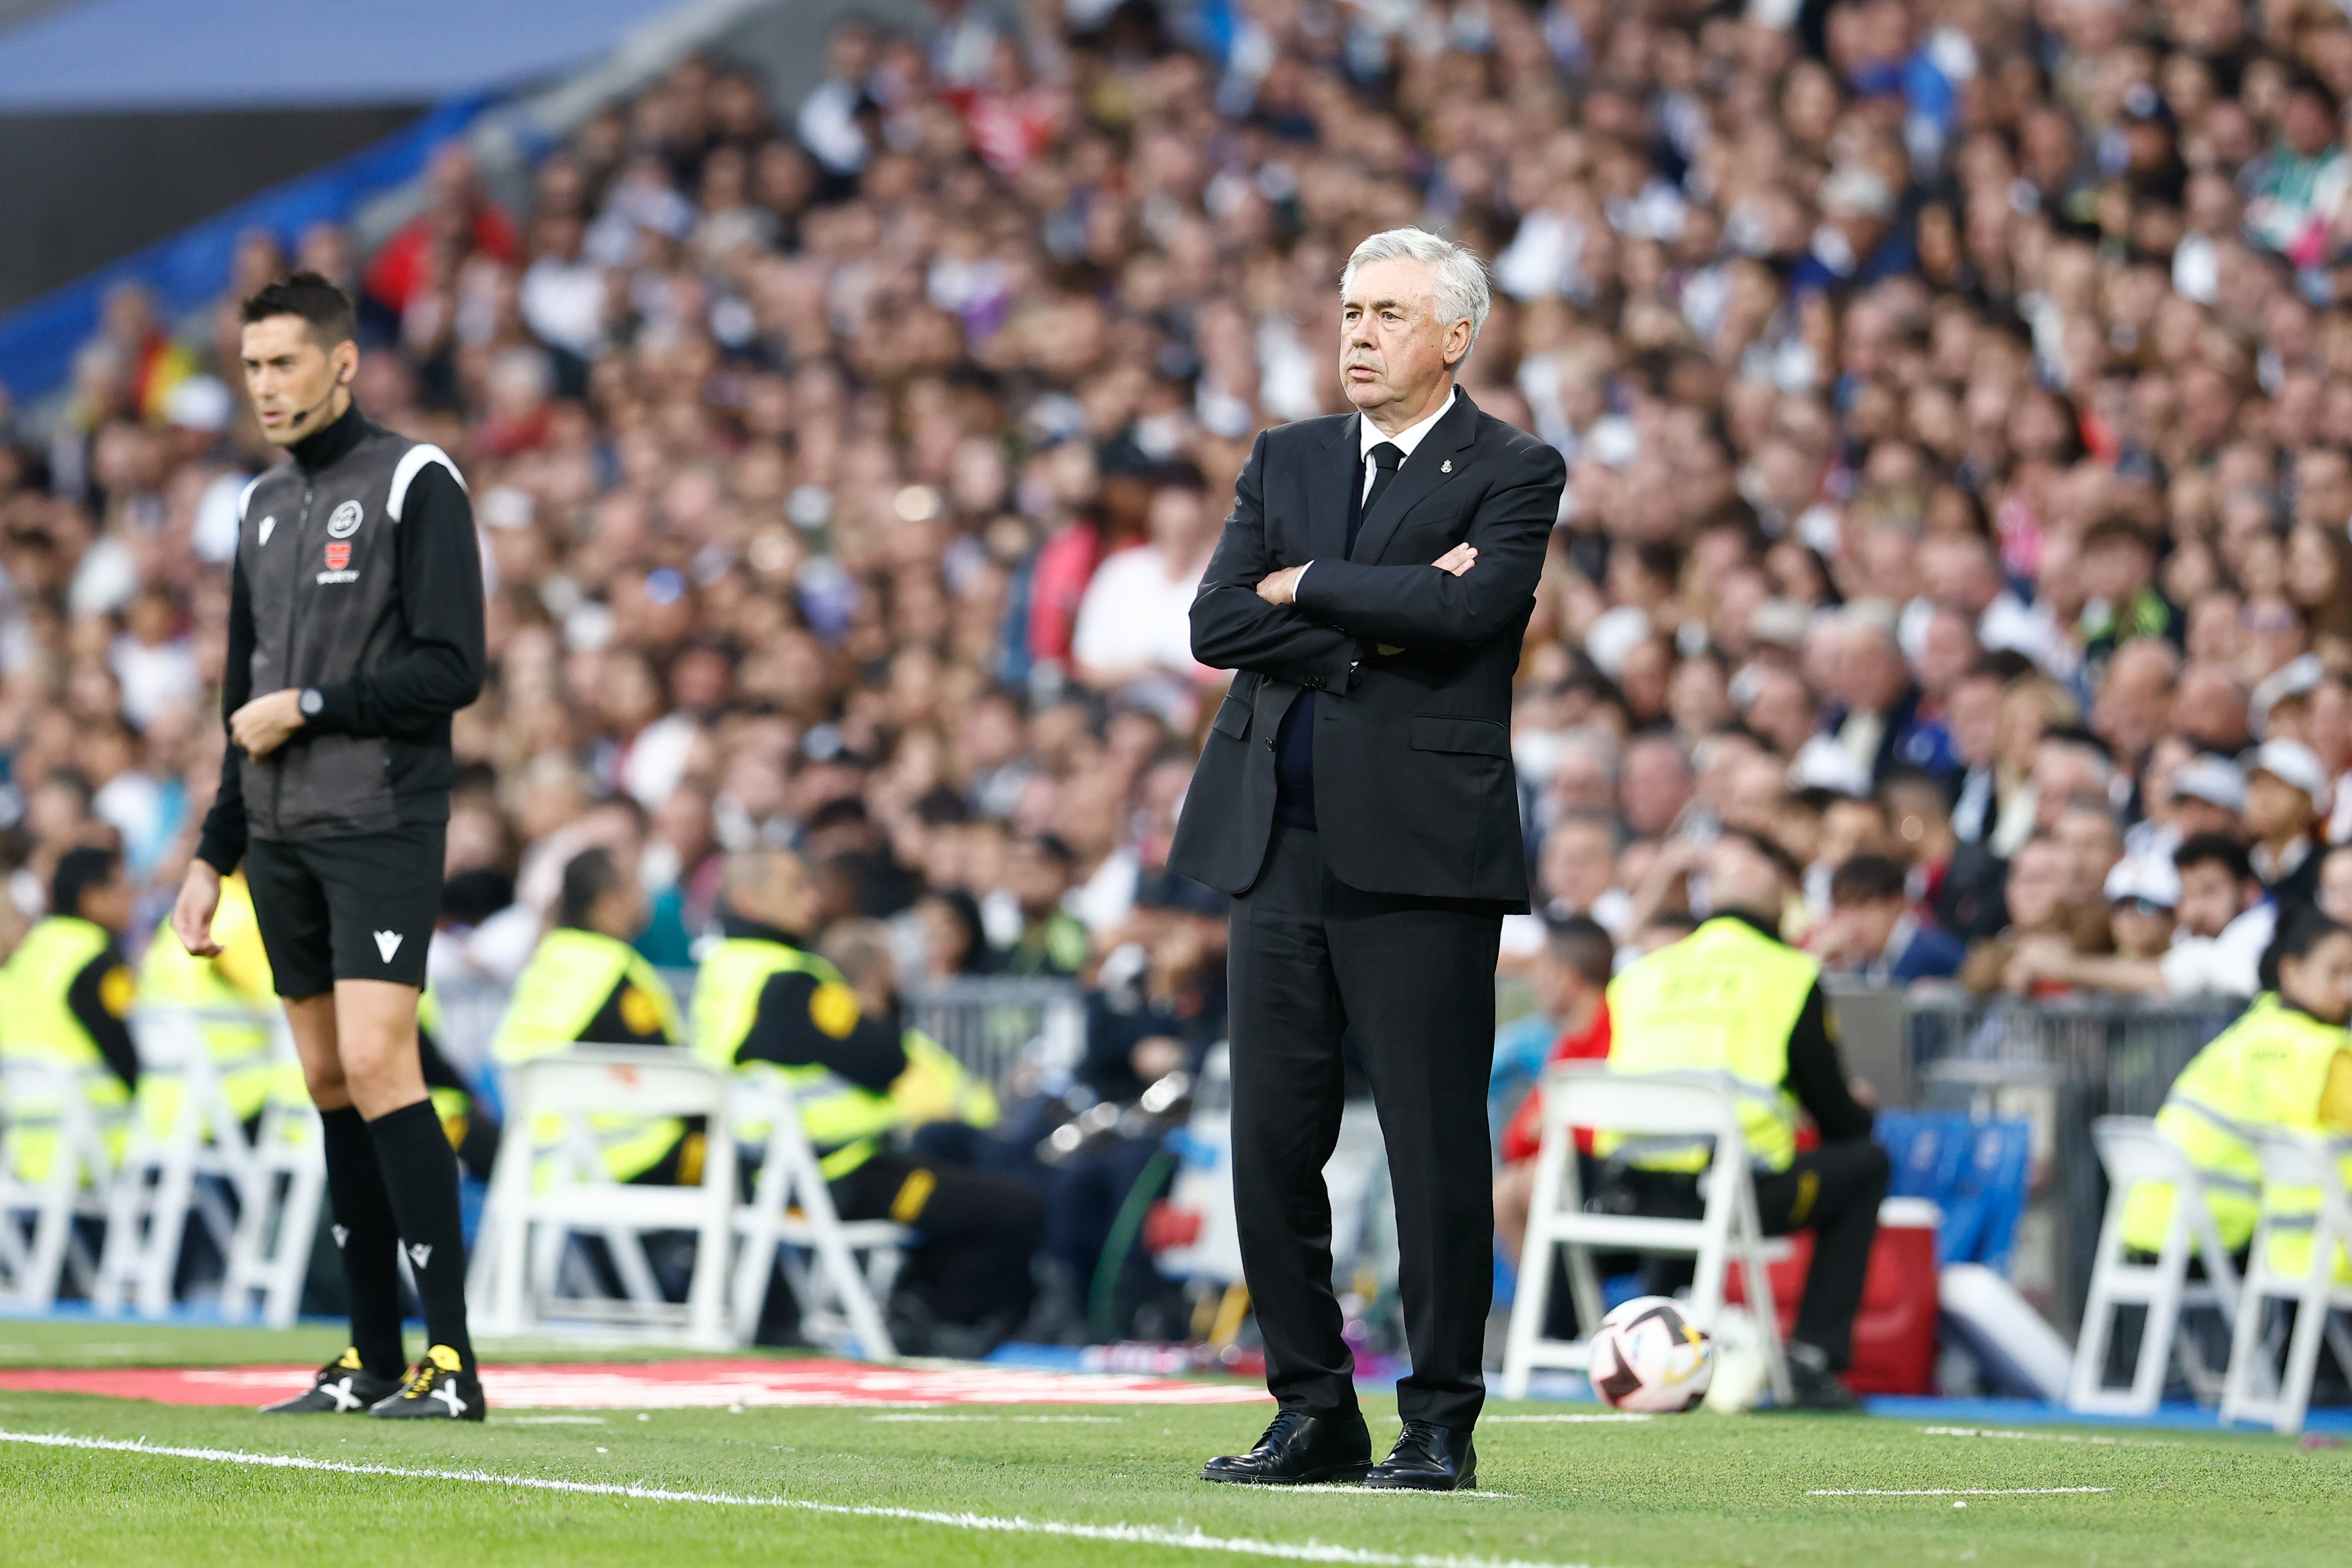 Ancelotti propone 3 finiquitos a Florentino Pérez, no quiere que vuelvan después del Mundial de Qatar